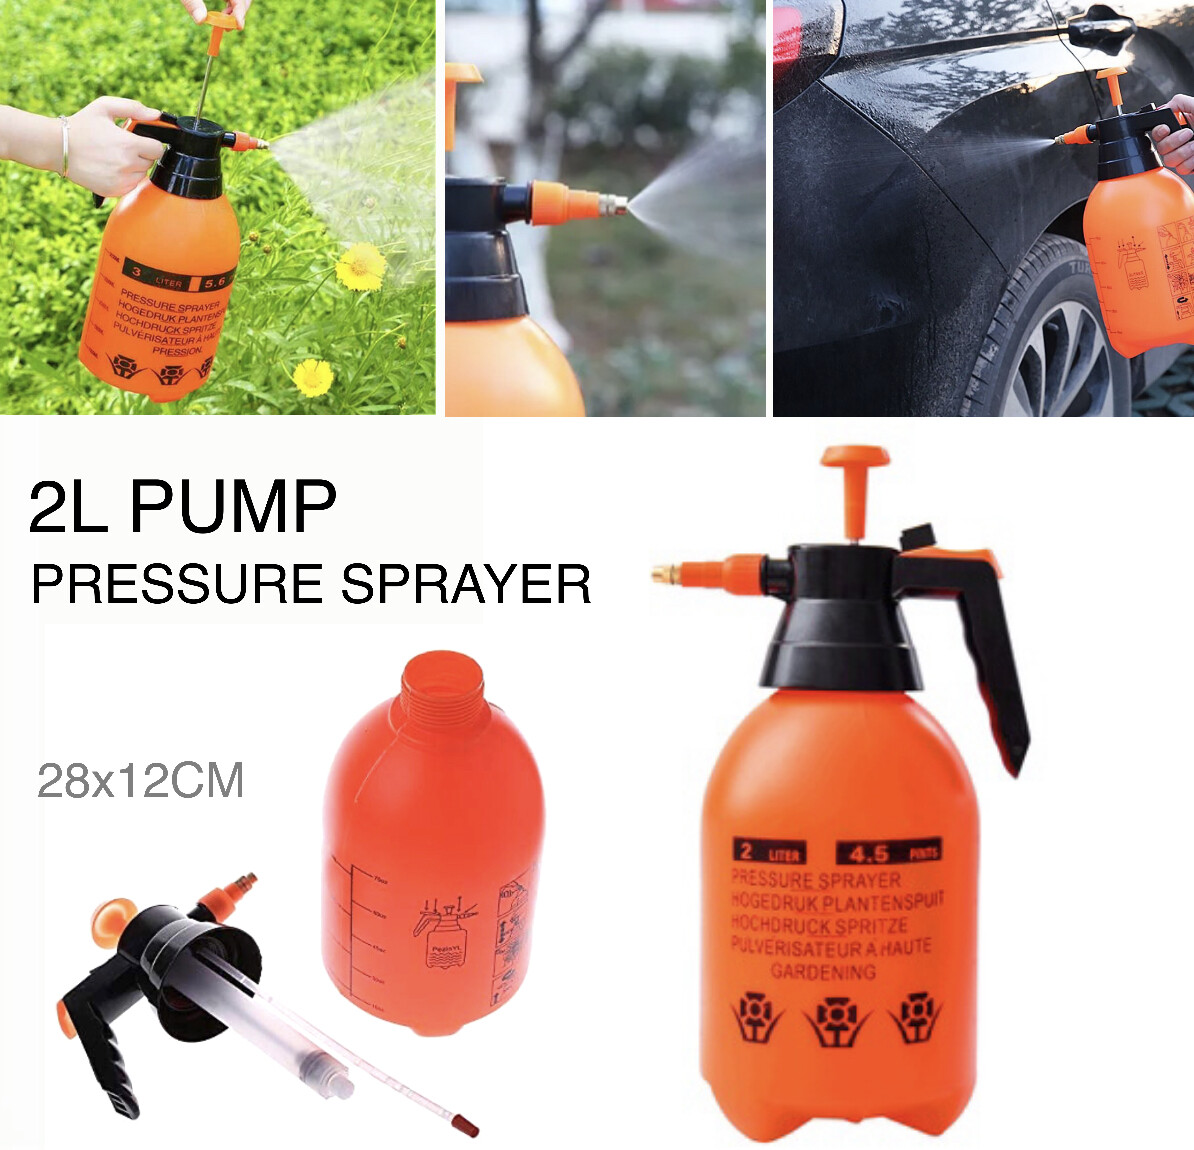 2L Pressure Sprayer*